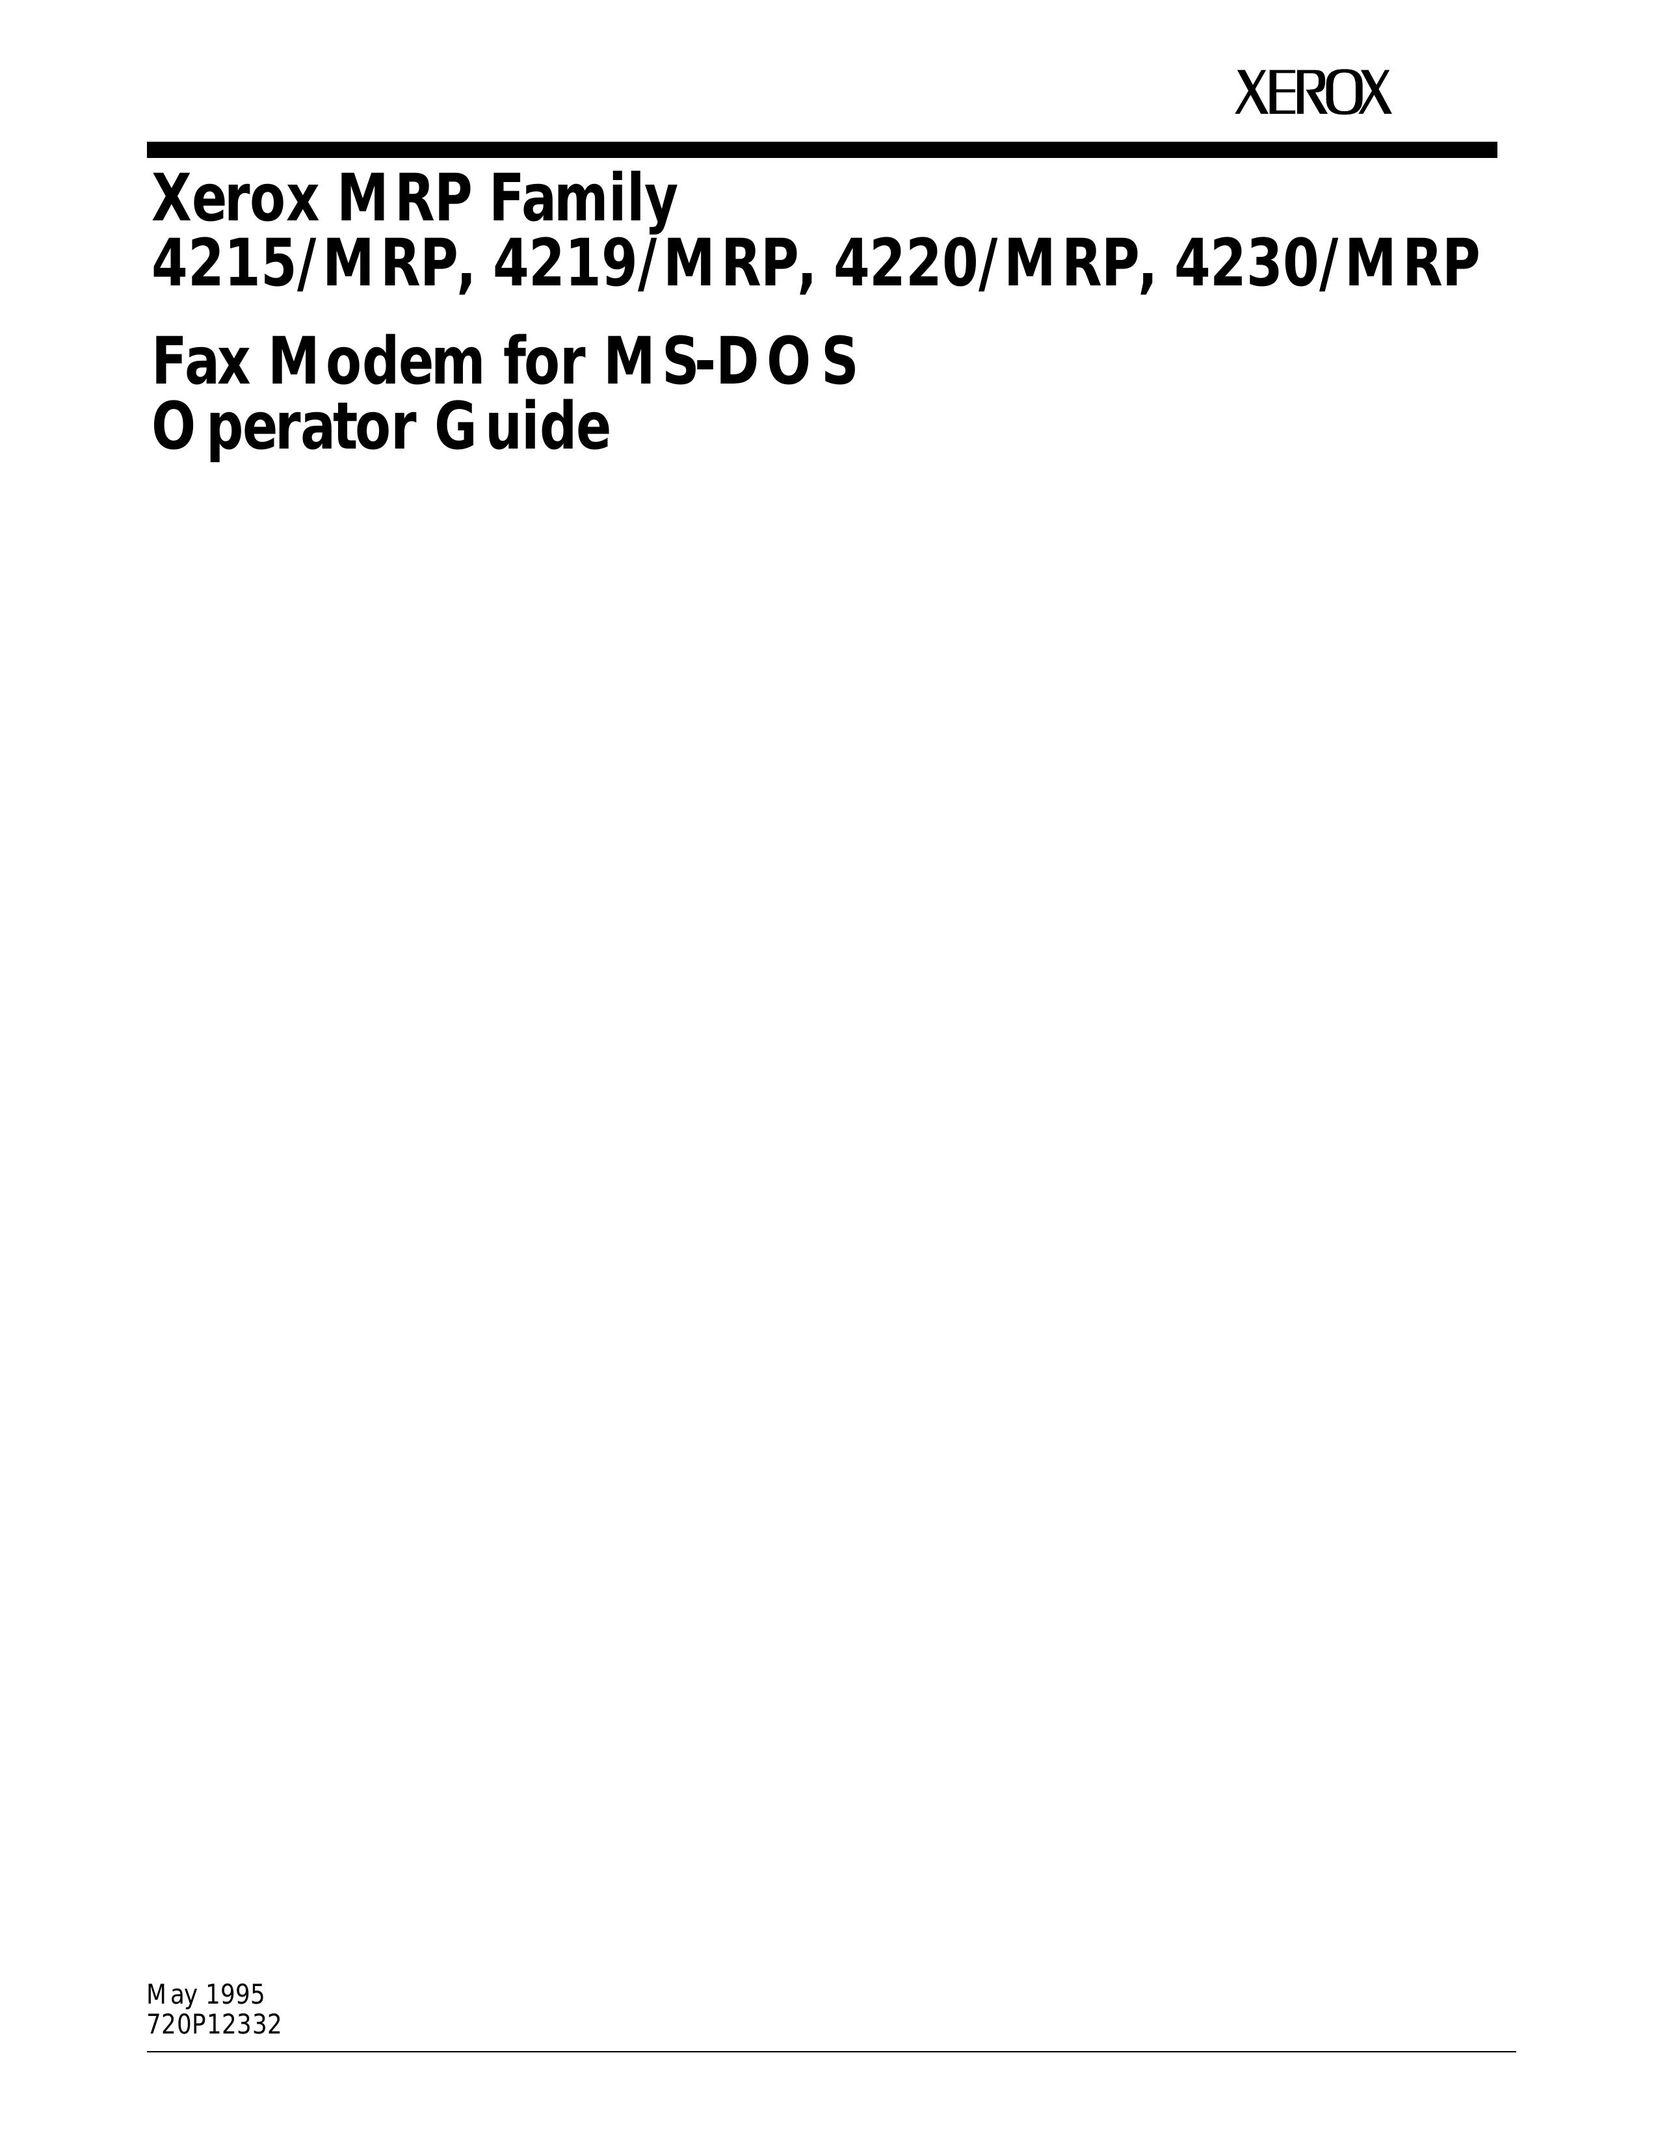 Xerox 4220/MRP Modem User Manual